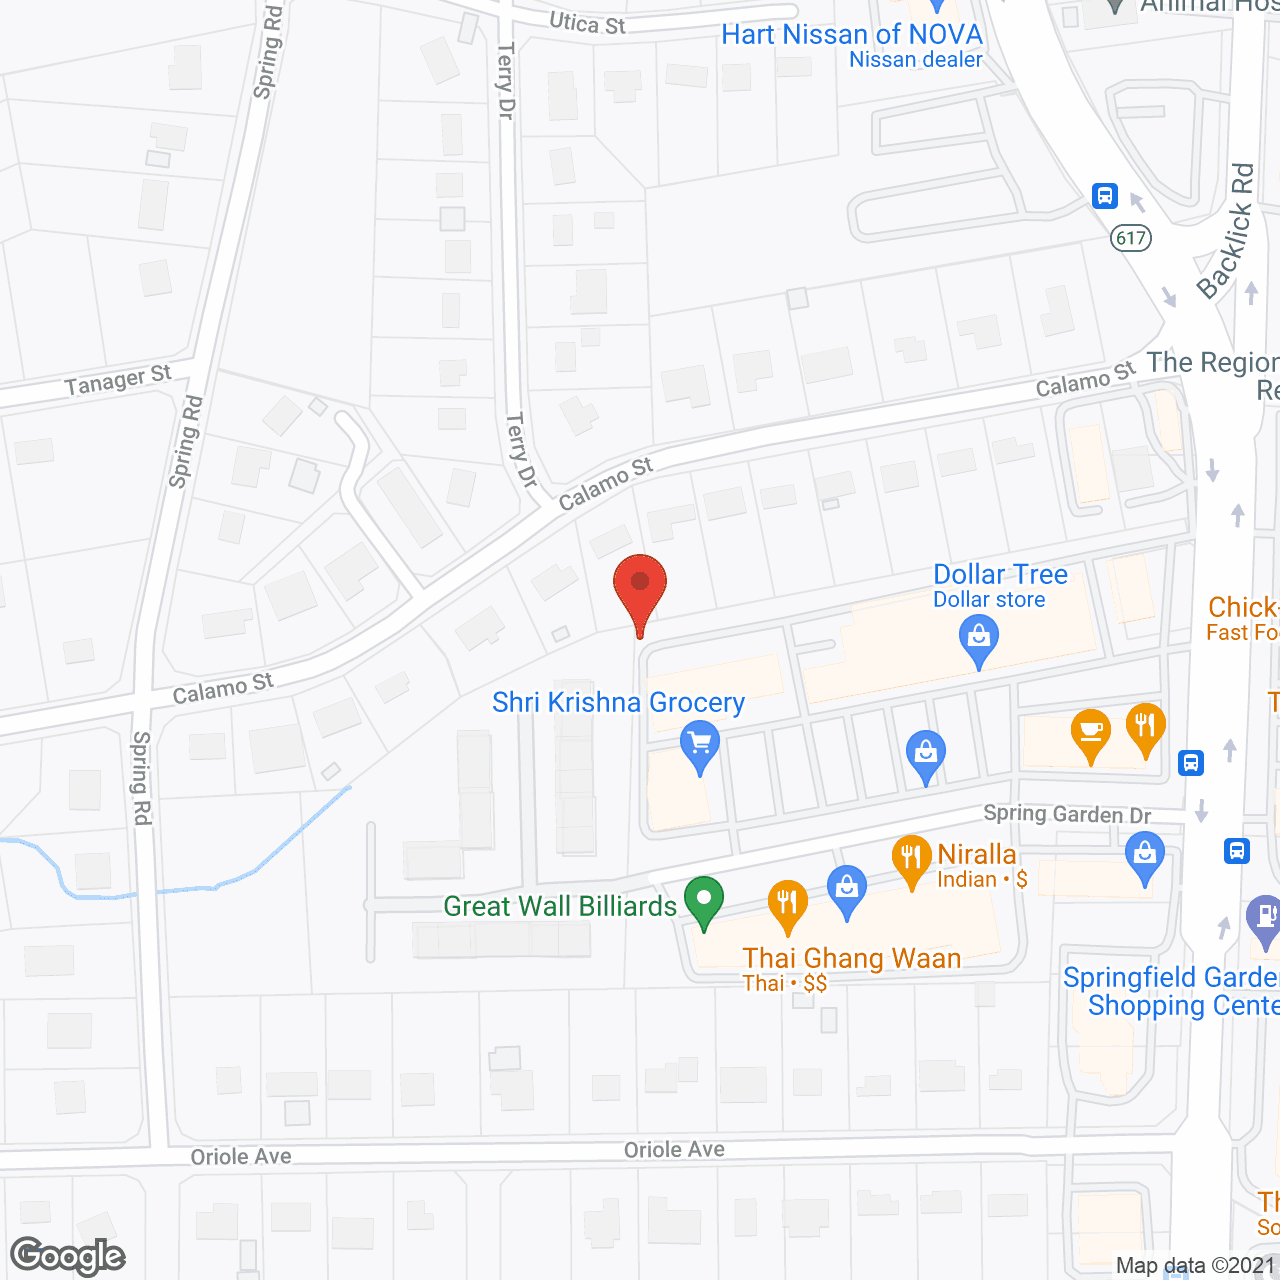 Comfort Senior Care Facility II in google map